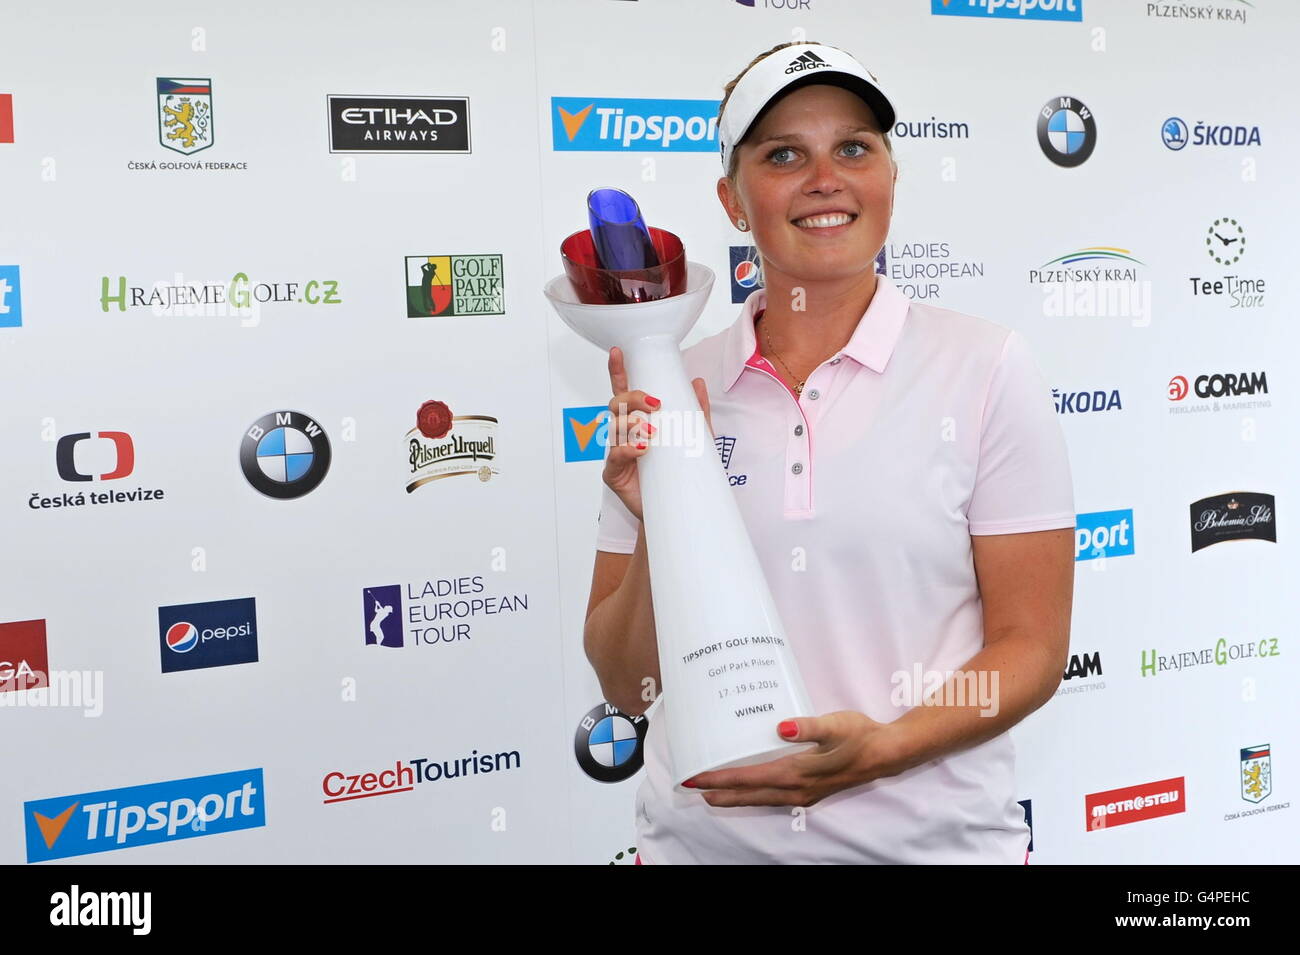 Winner Nanna Koerstz Madsen of Denmark holds her trophy during the Tipsport Golf Masters Ladies European Tour in Pilsen Golf Resort Dysina, Czech Republic, June 19, 2016. (CTK Photo/Pavel Nemecek) Stock Photo